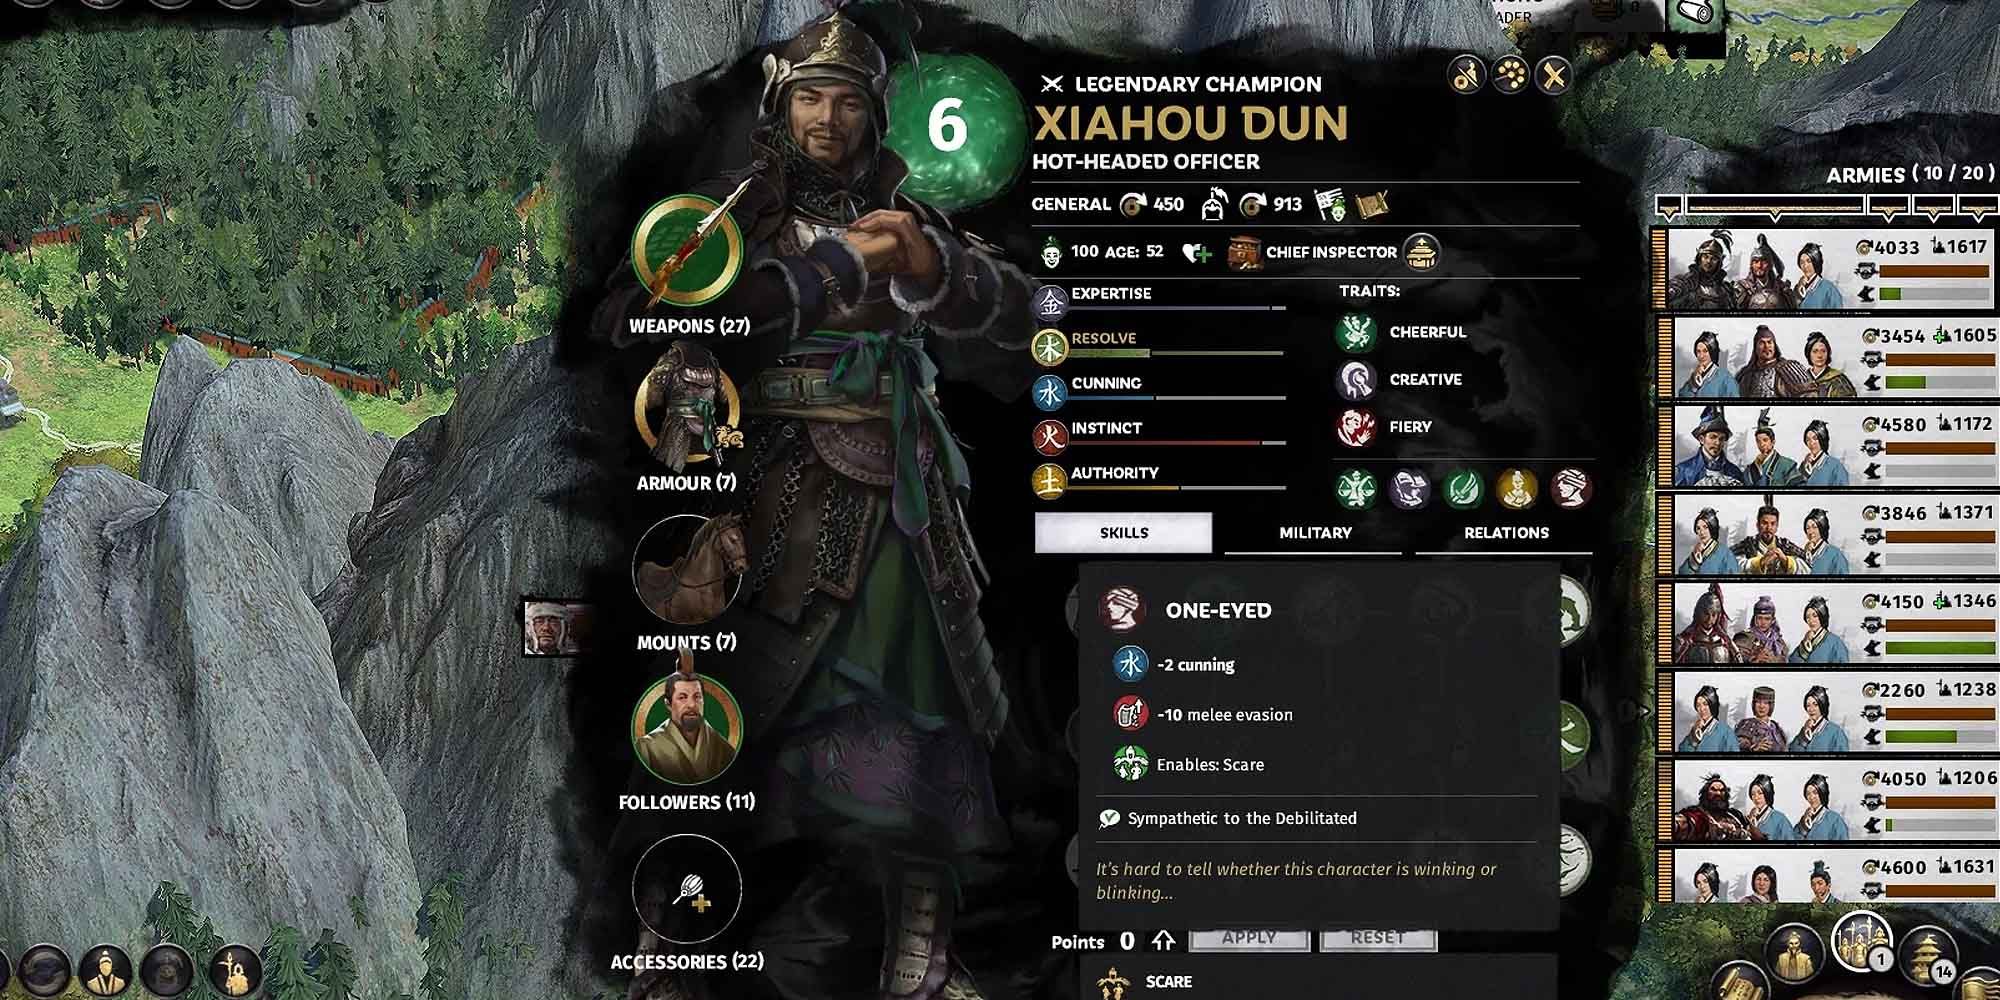 Xiahou Dun''s profile in Total War: Three Kingdoms